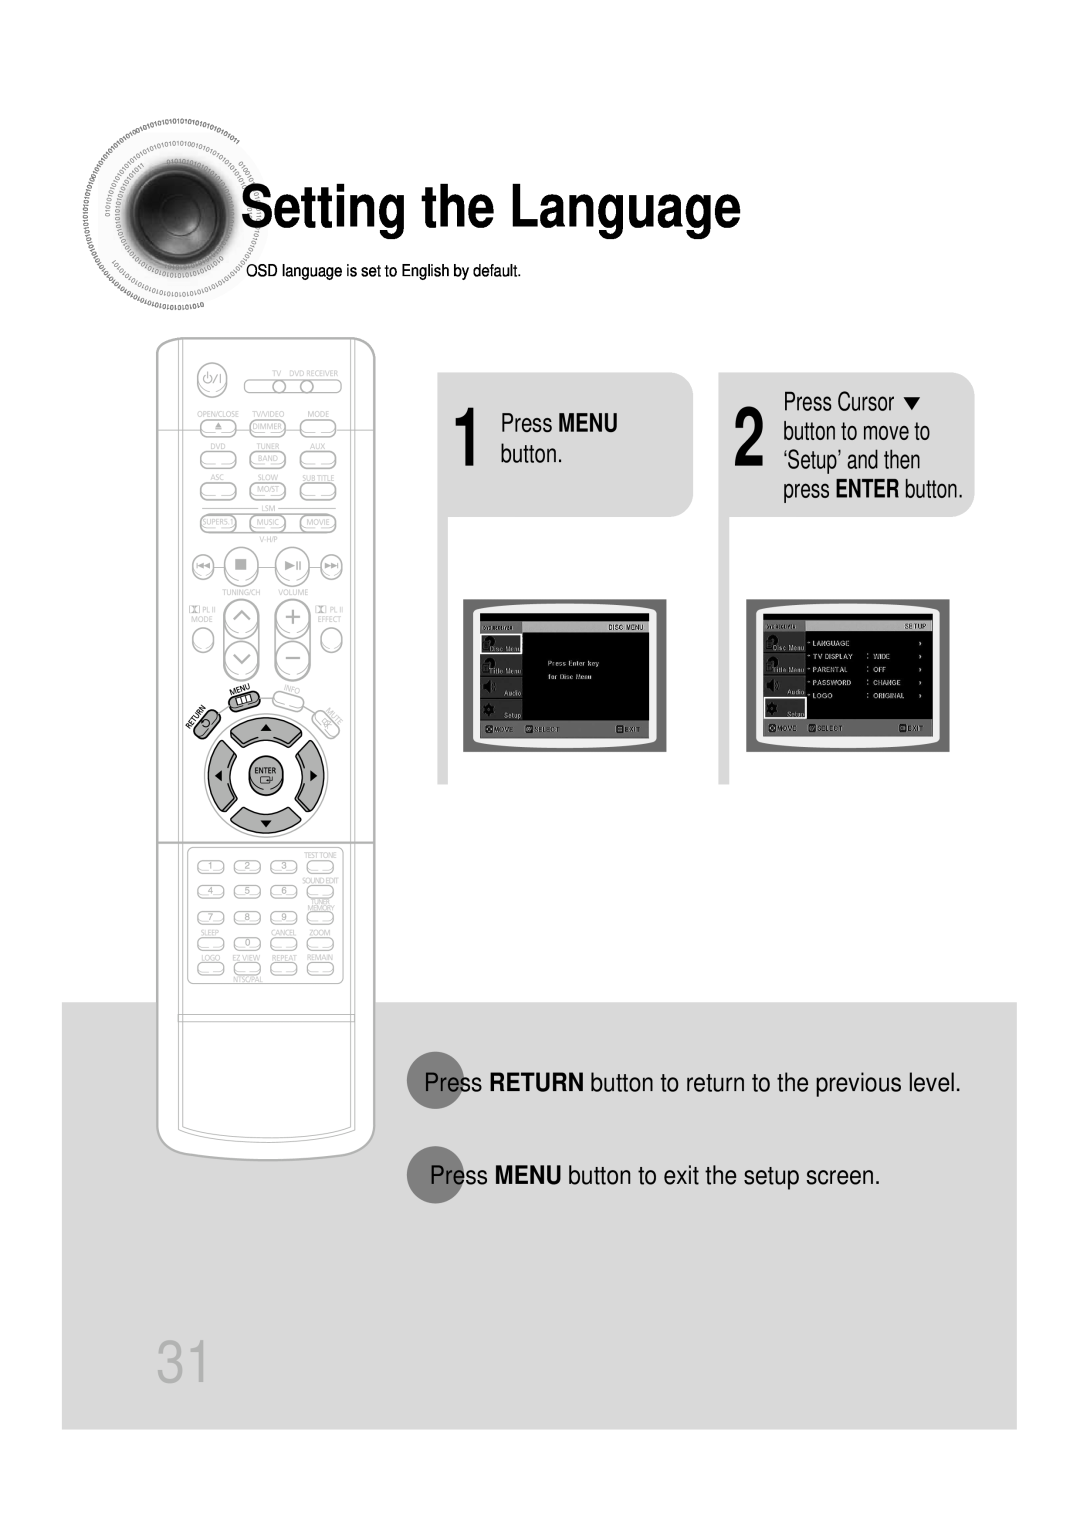 Samsung HT-DB350 Settingthe Language, press ENTER button, Press MENU button to exit the setup screen, Press Cursor 